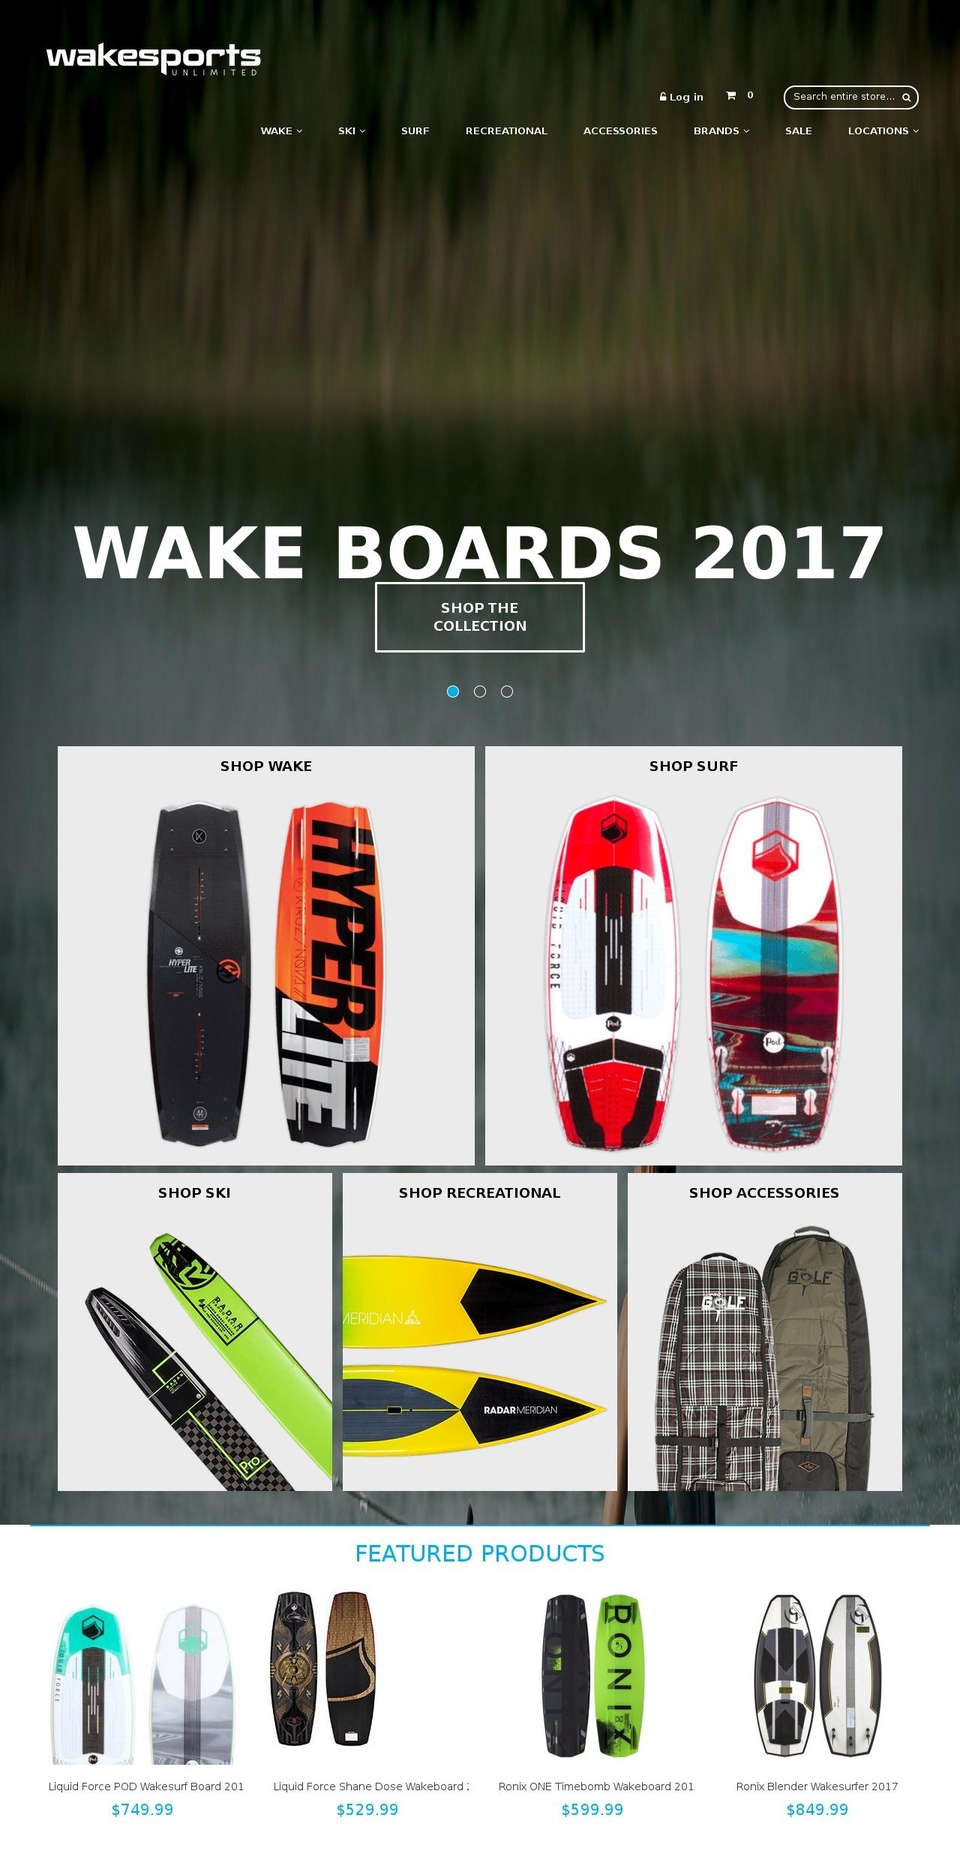 Sports Shopify theme site example wakesports.com